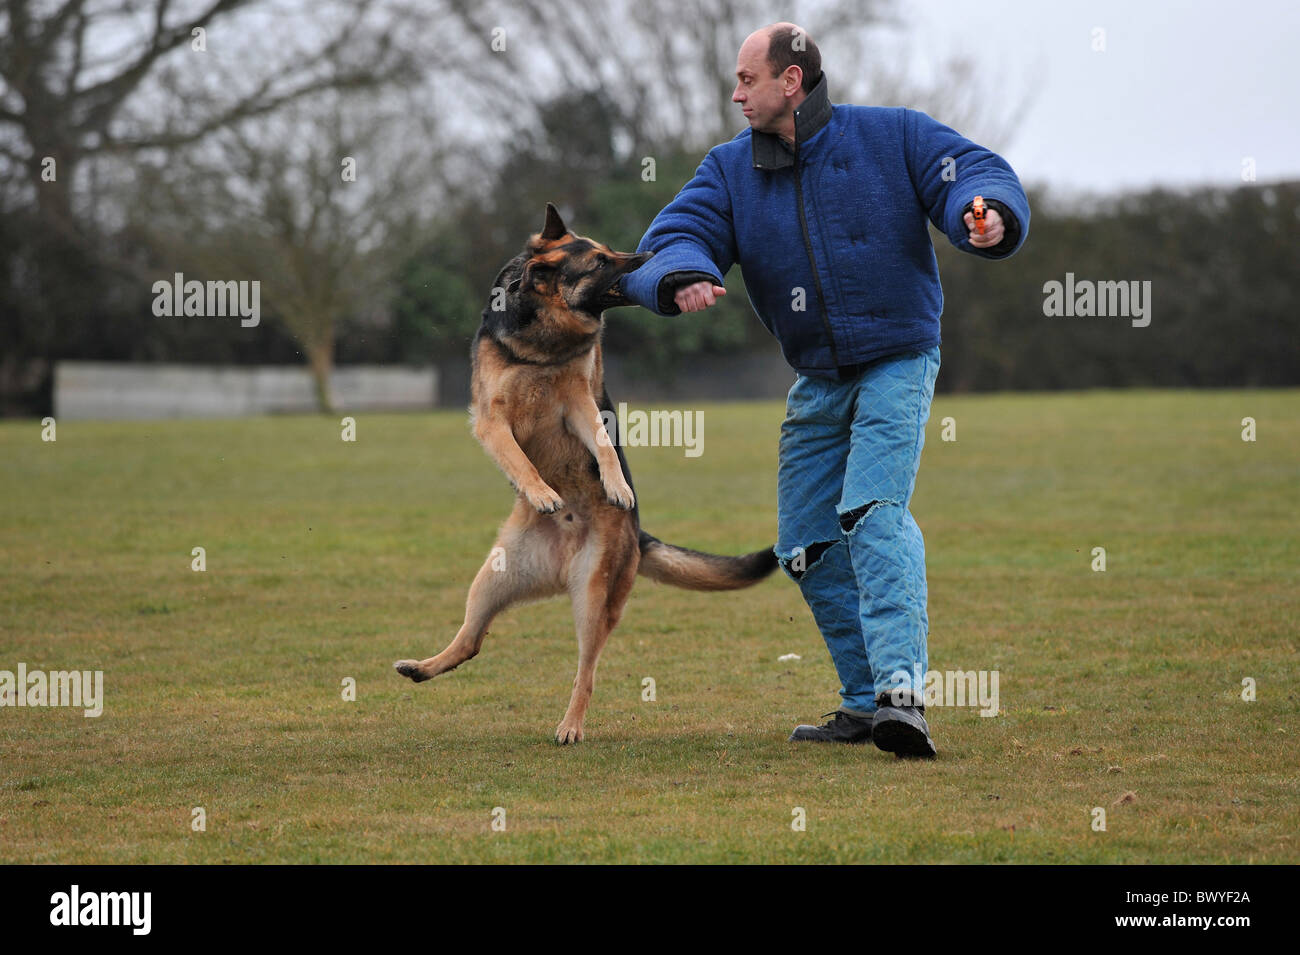 german shepherd police dog in action